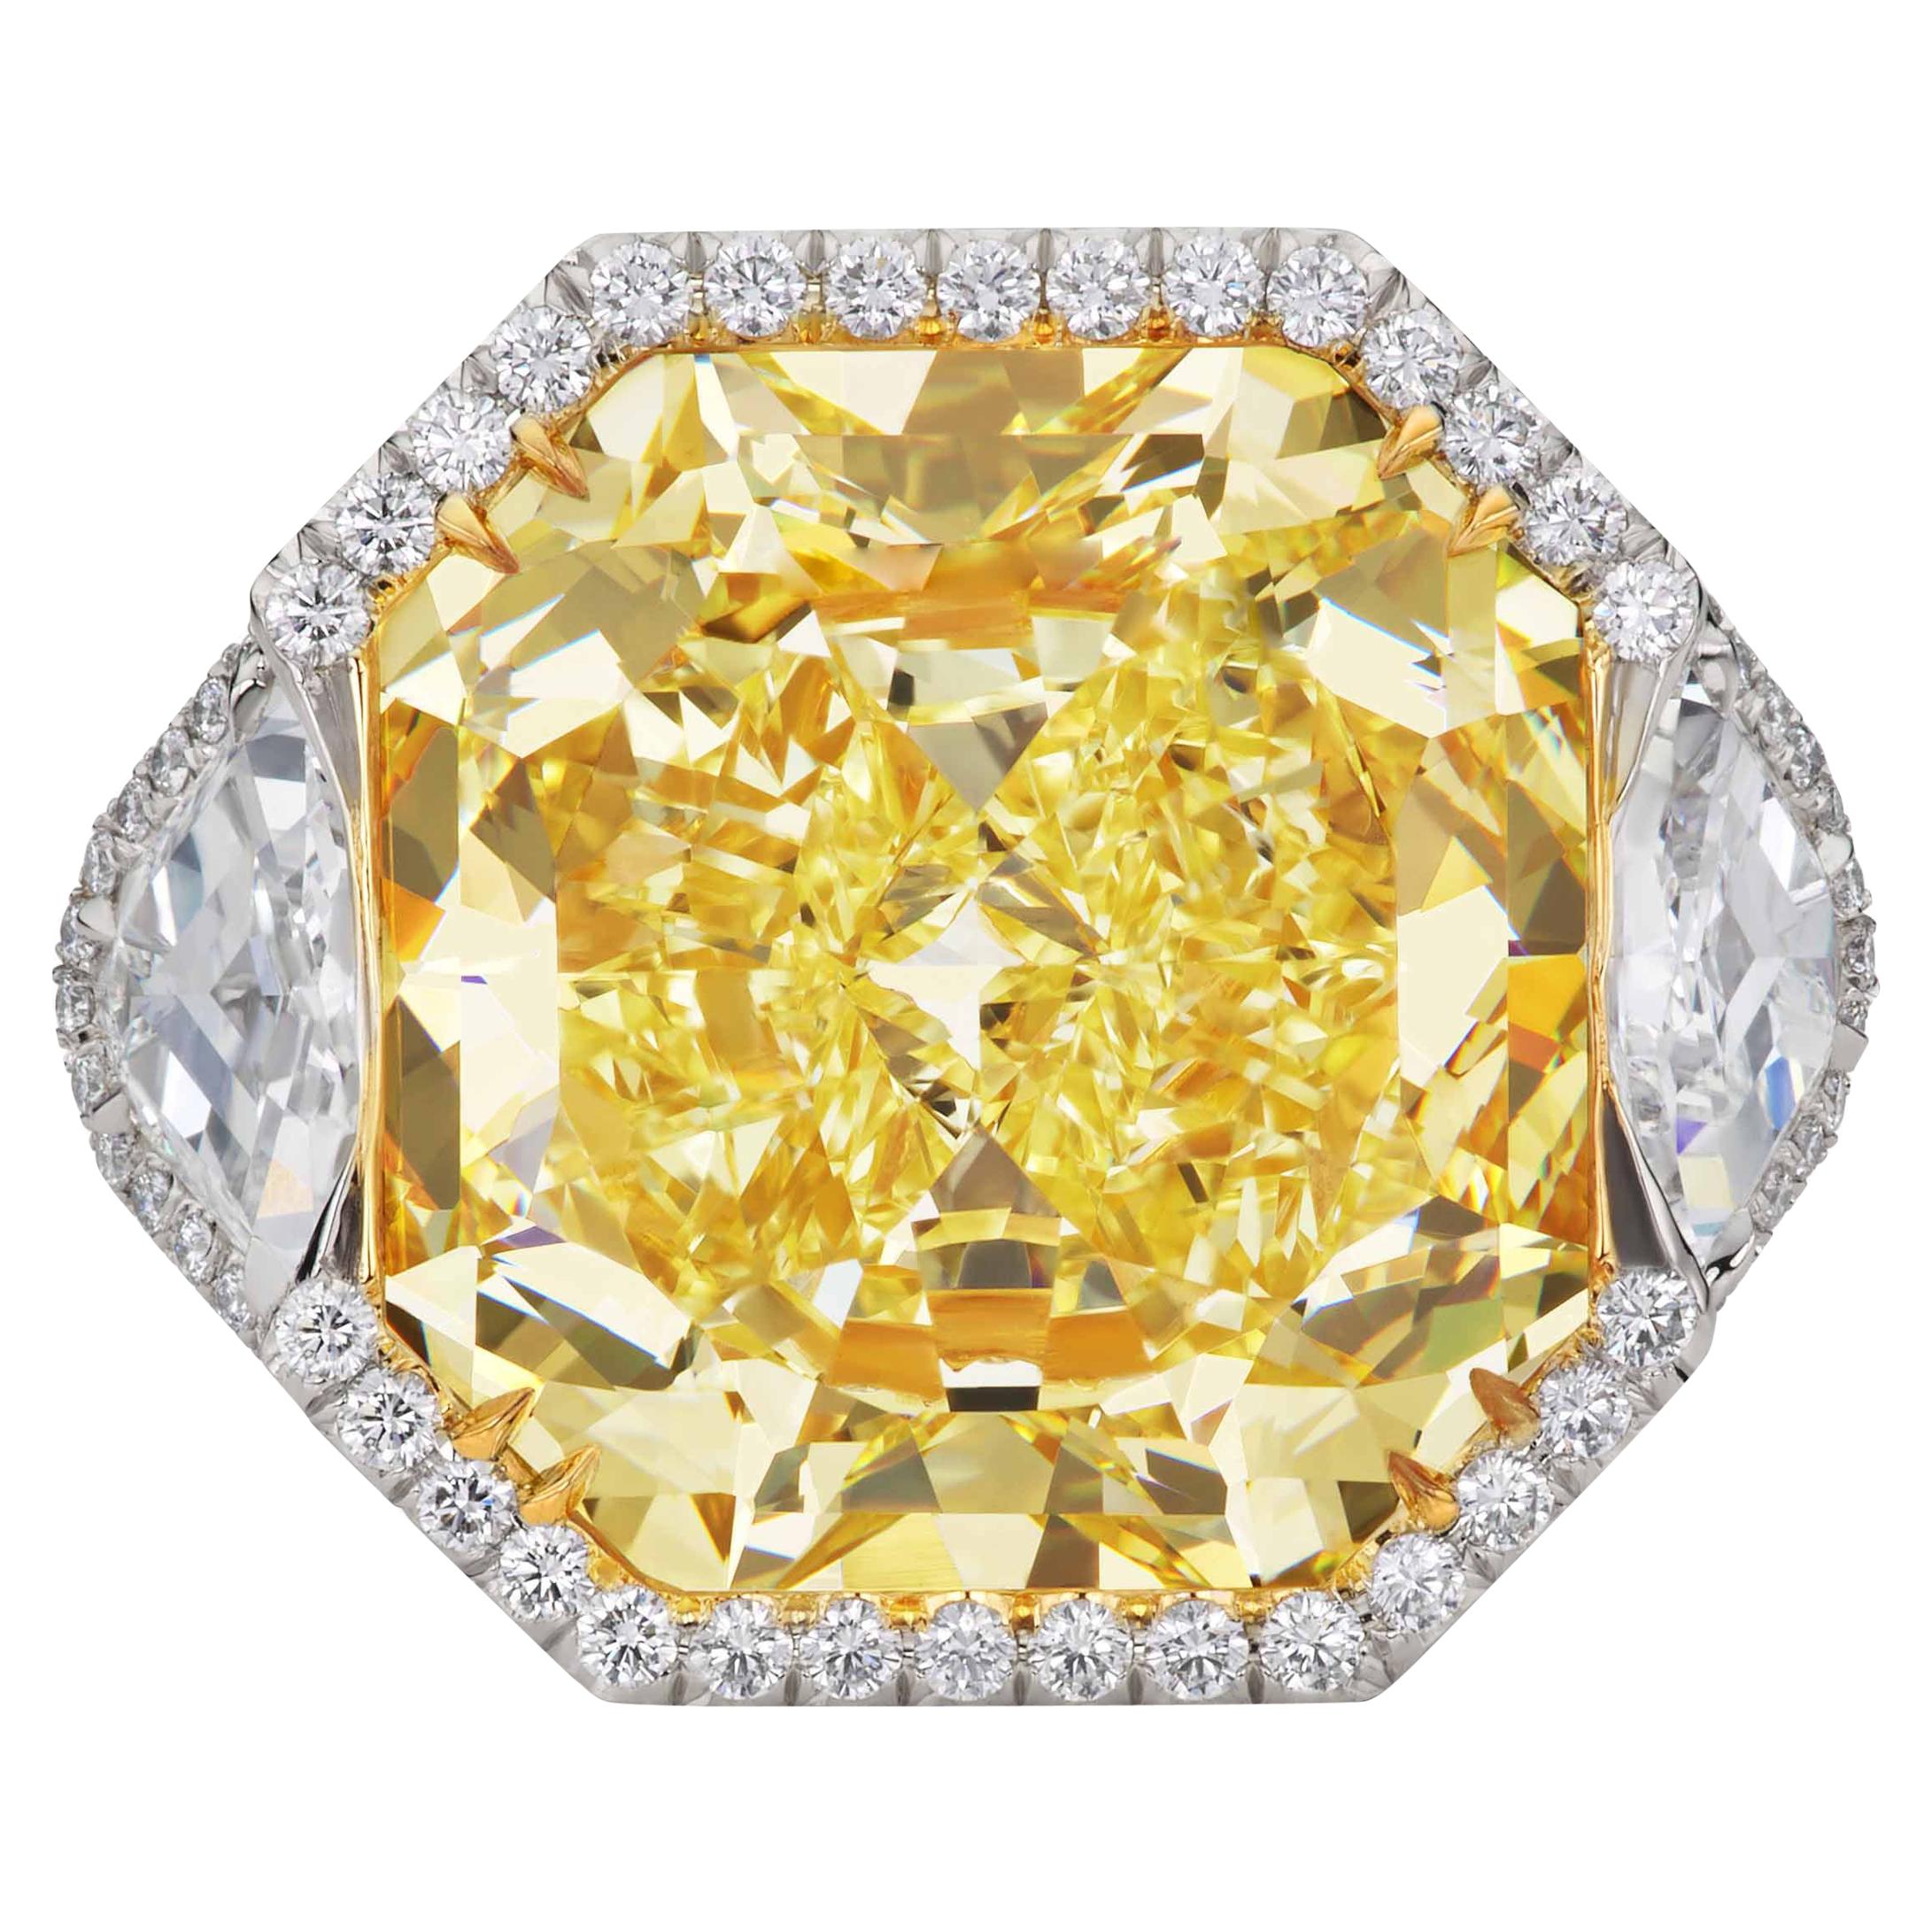 SCARSELLI 20 Carat Fancy Vivid Yellow Natural Diamond Ring GIA